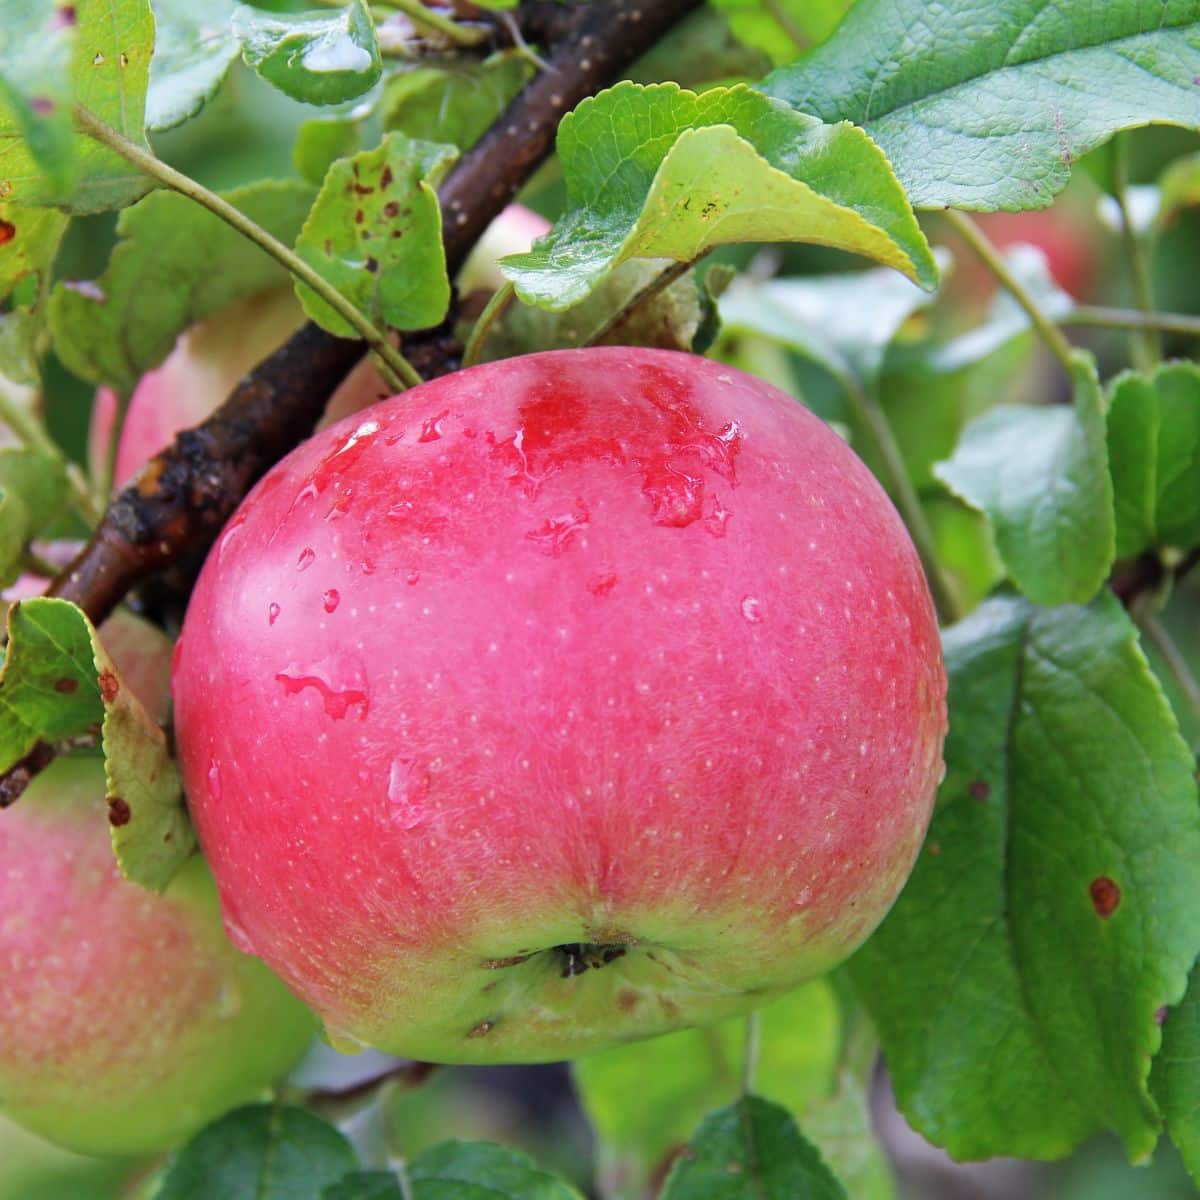 A wealthy apple on a tree.